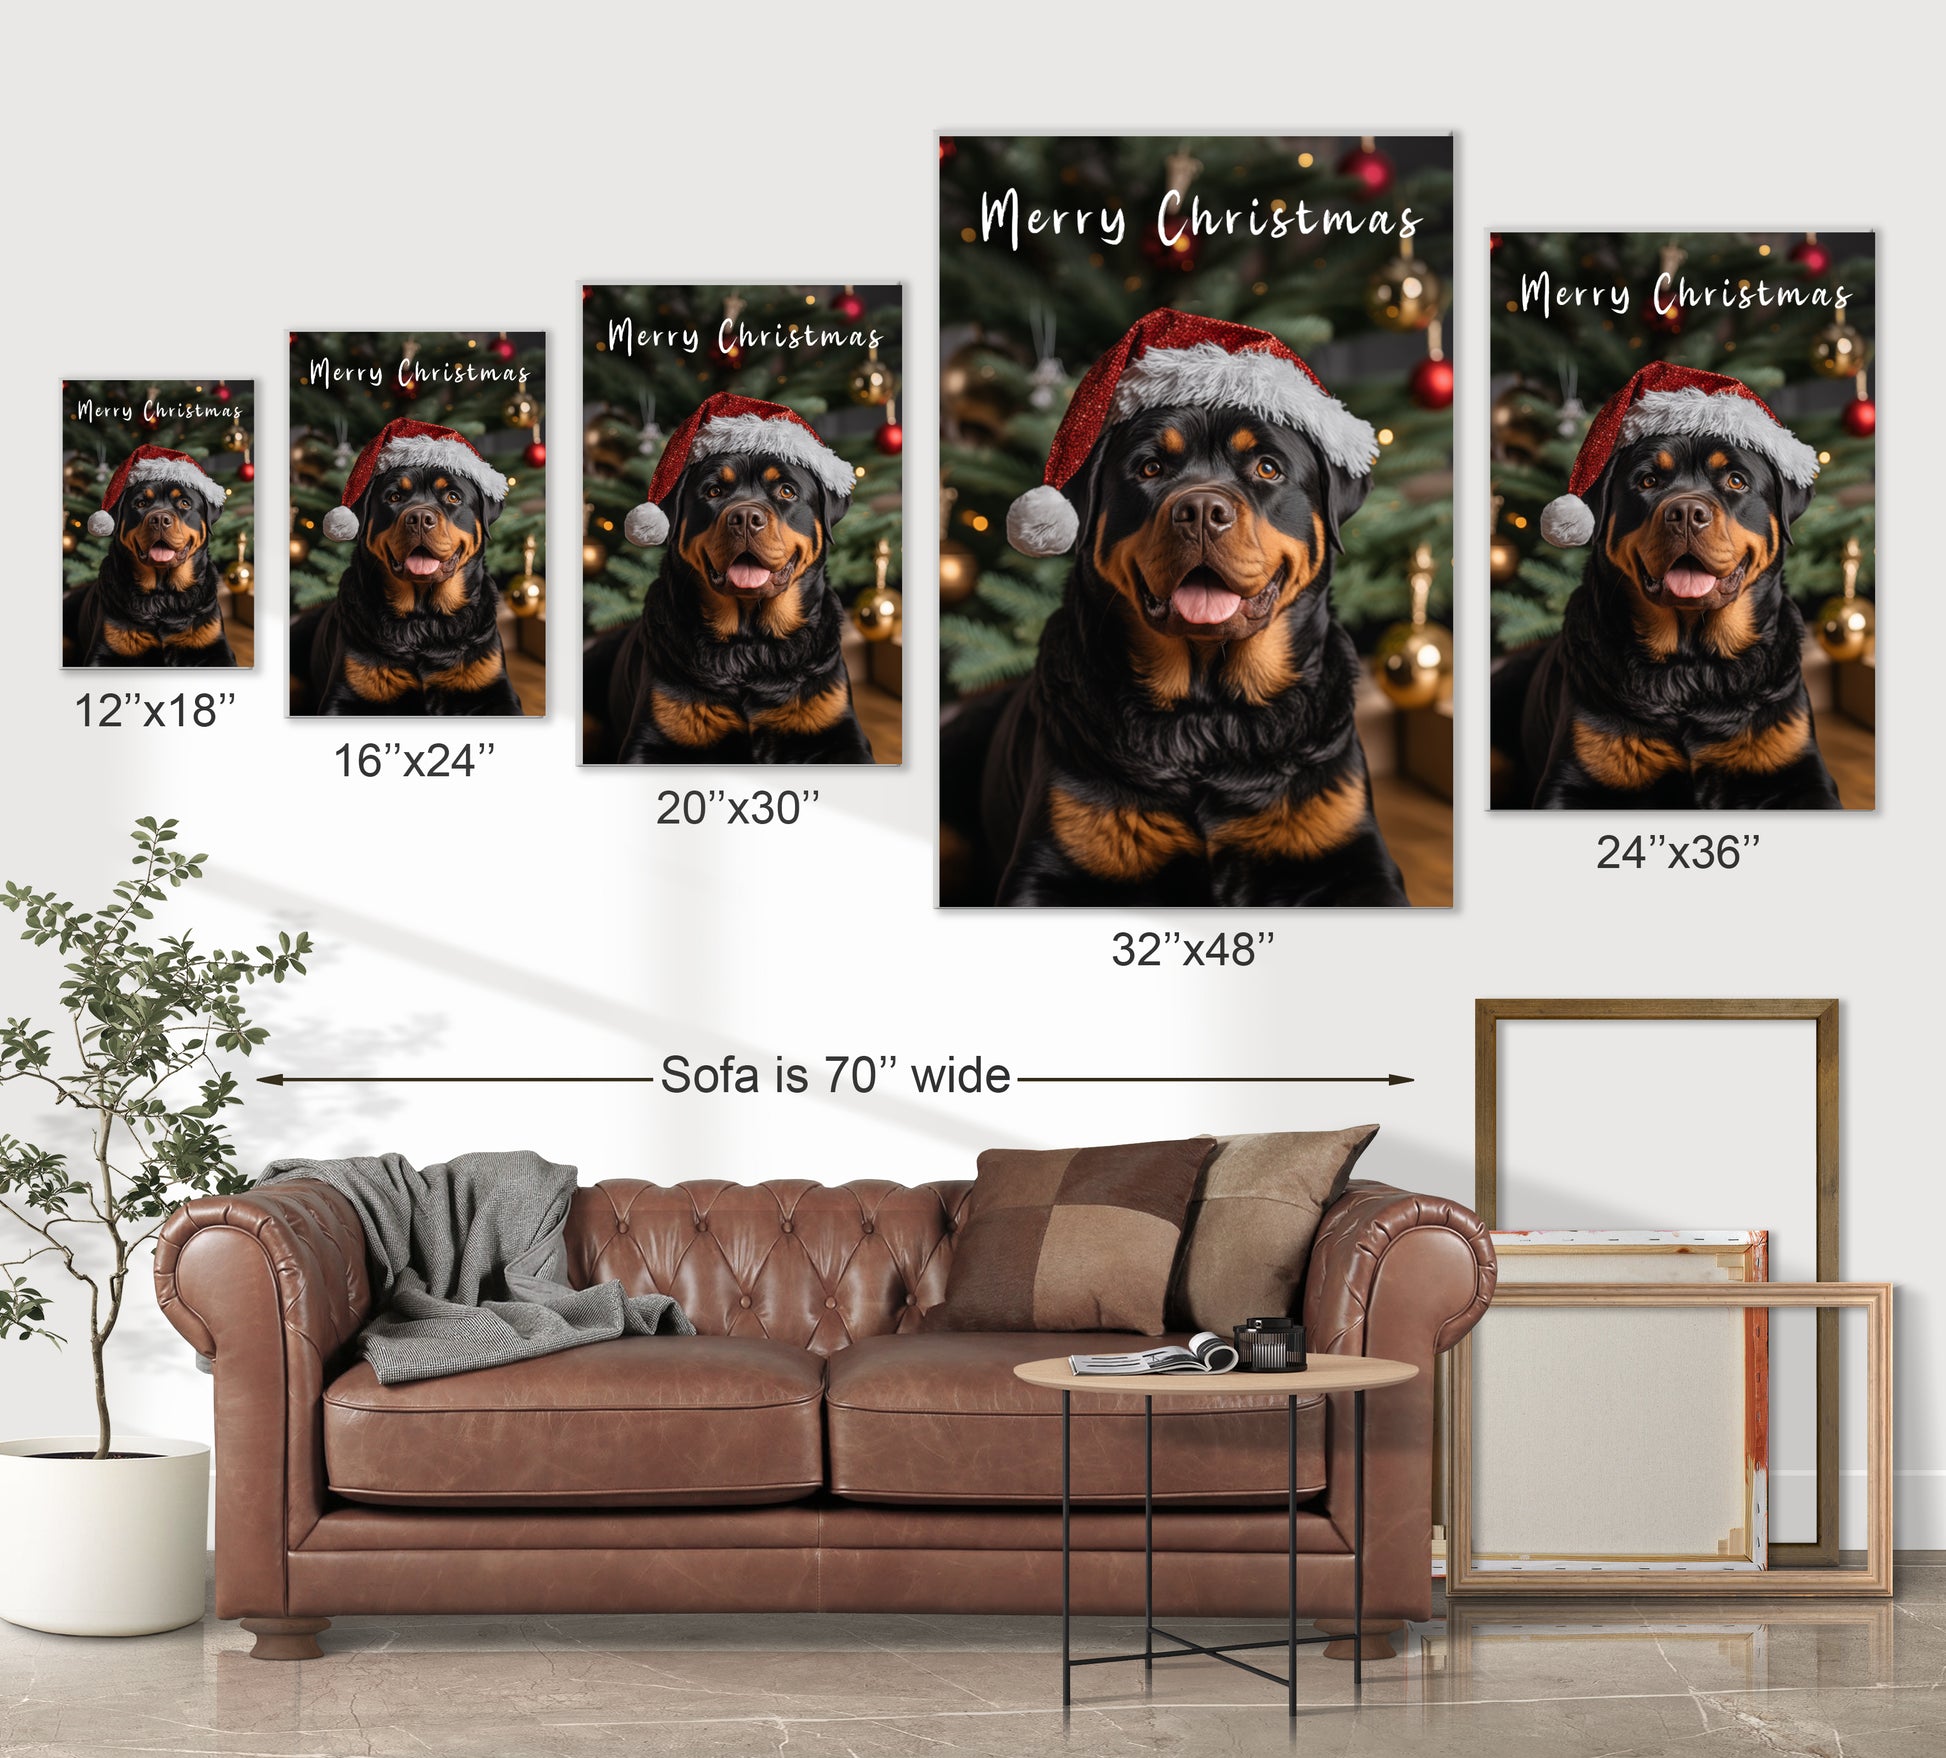 Christmas Rottweiler wearing Santa’s hat wall decor